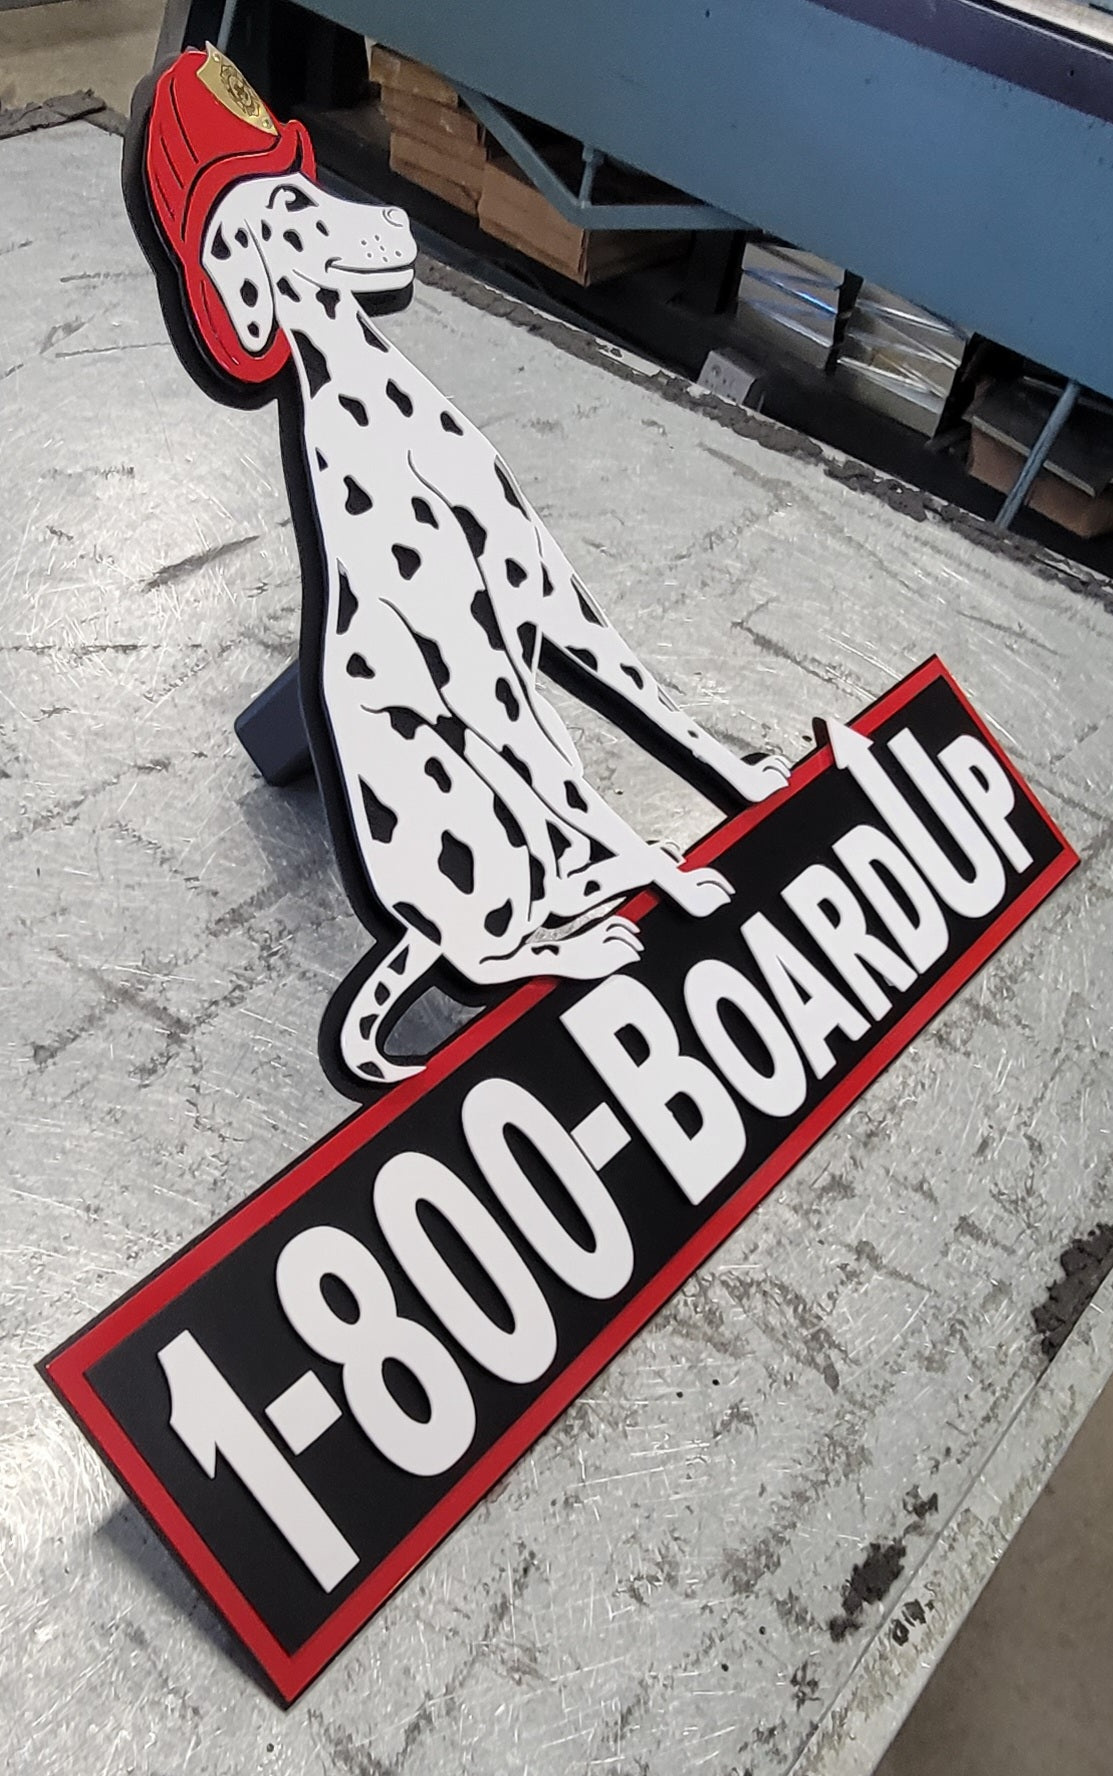 1-800-BoardUp Logo